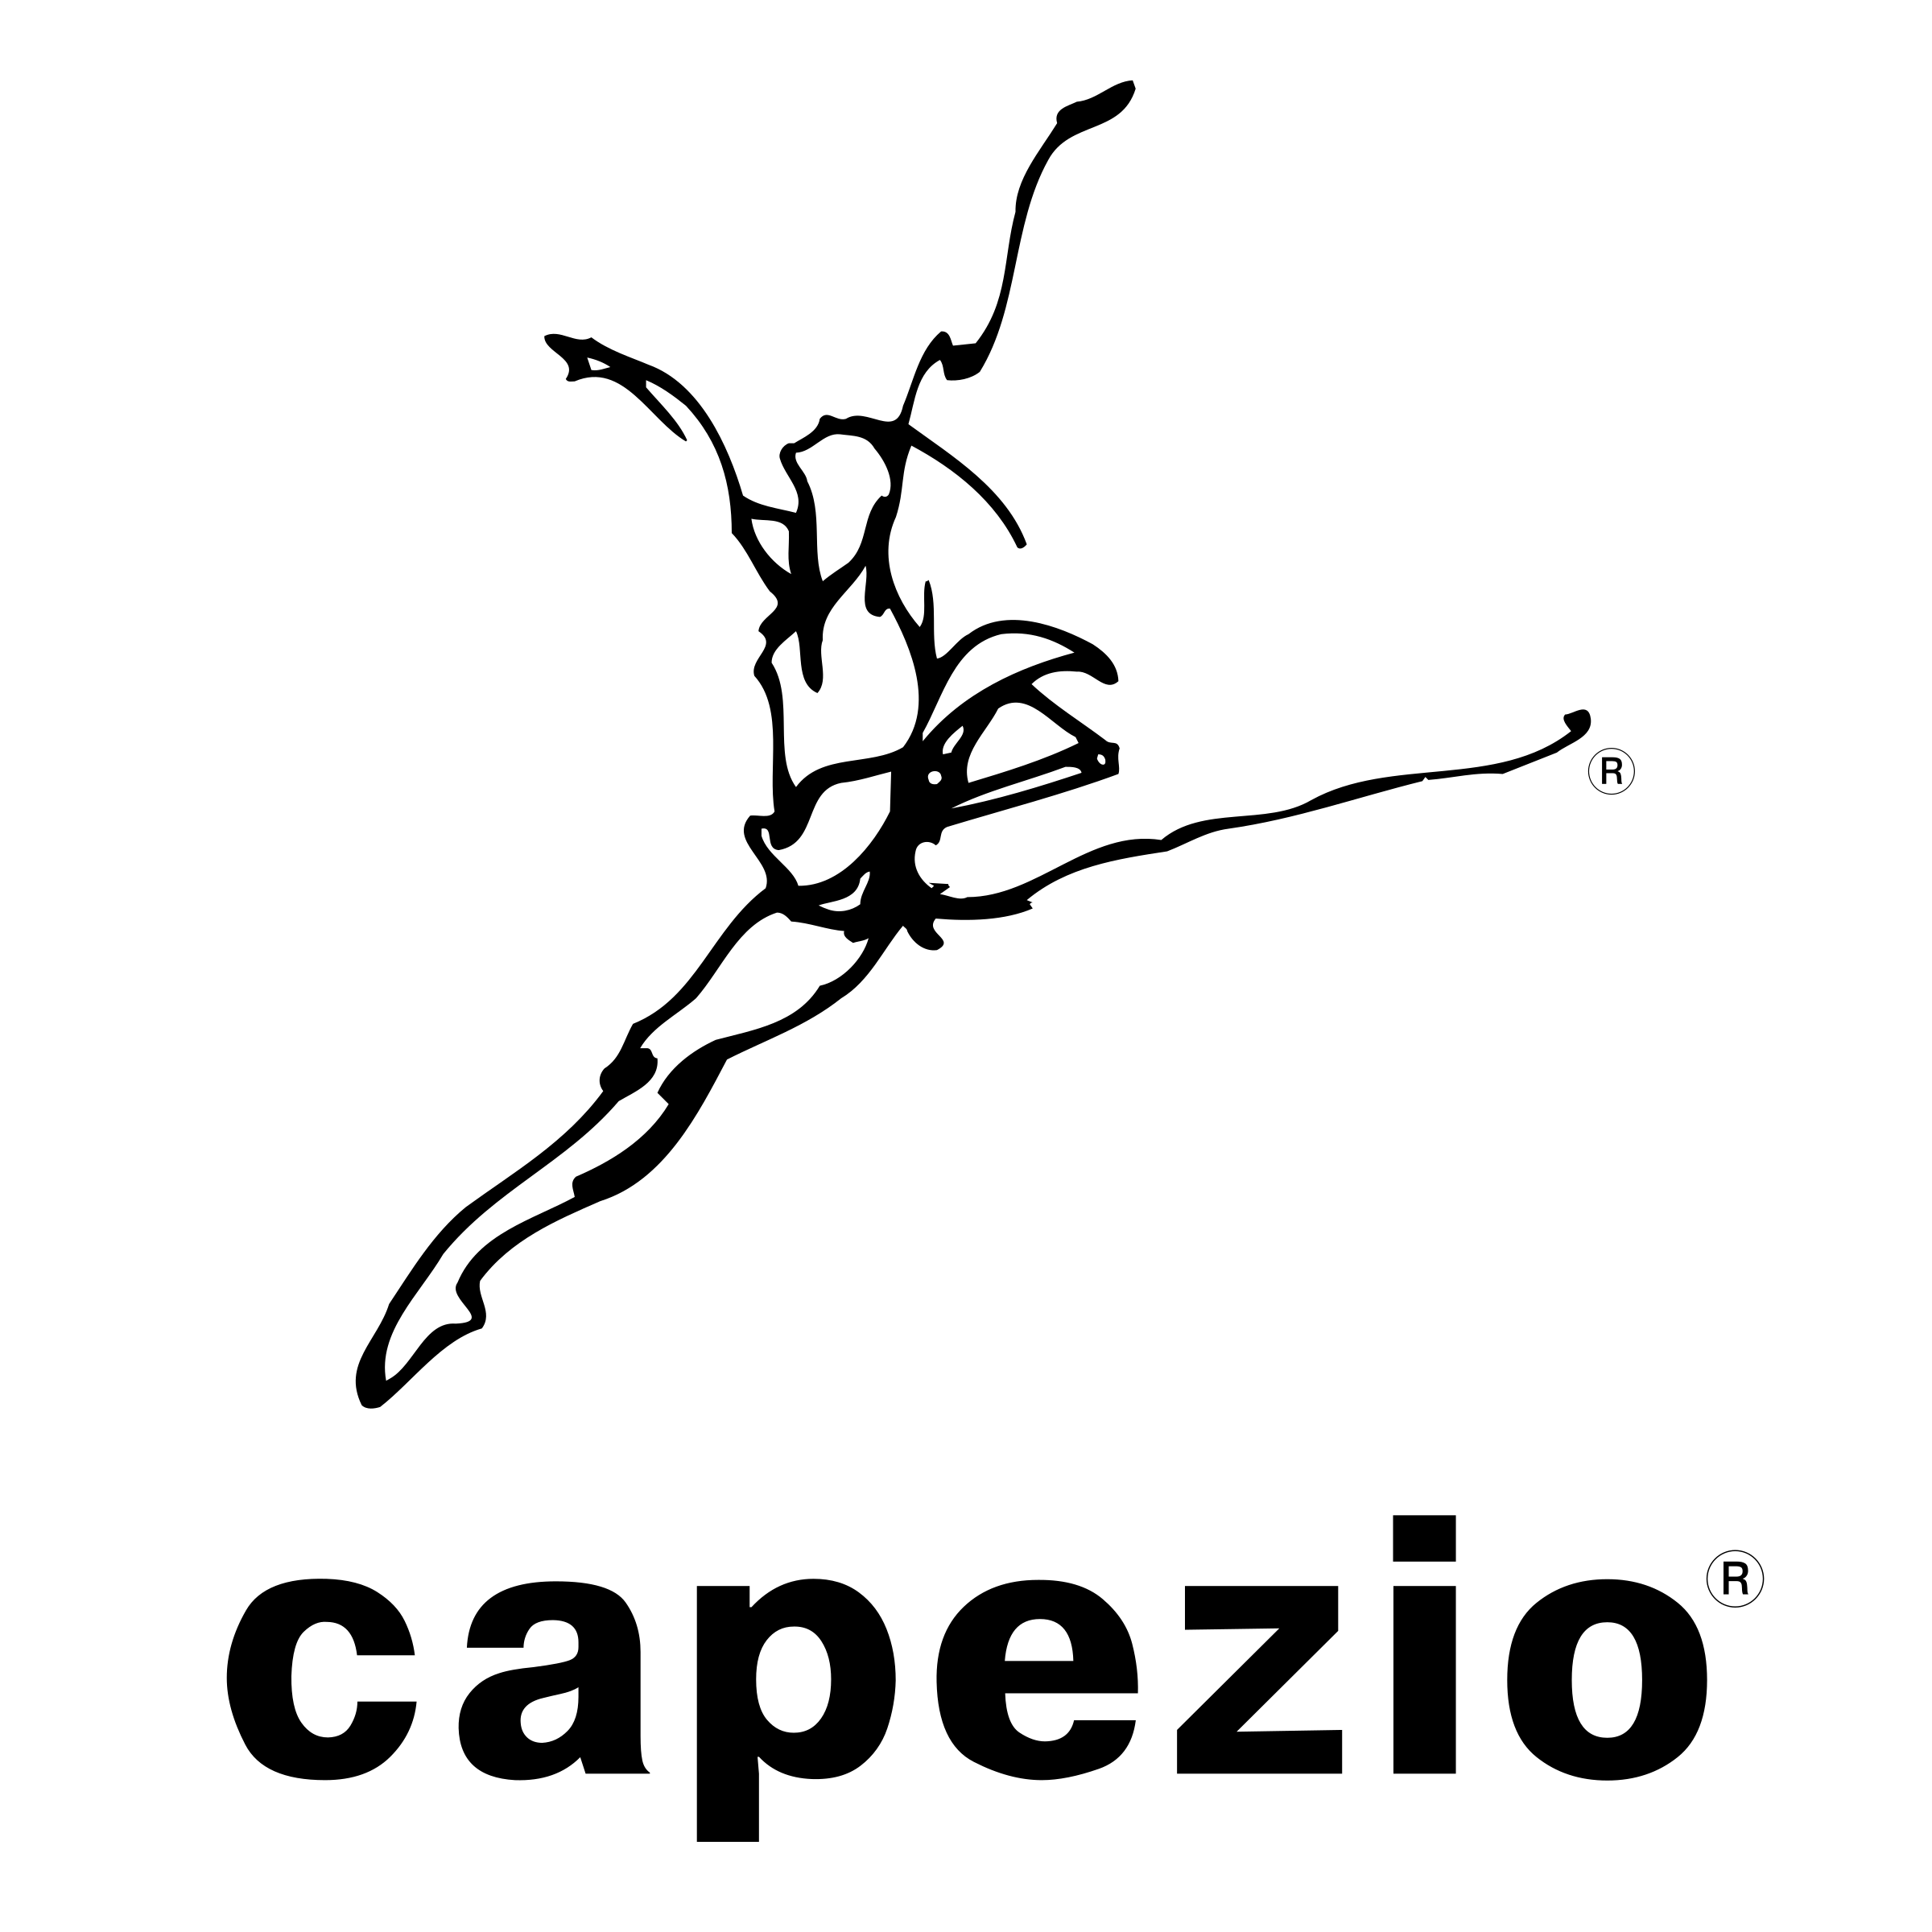 Capezio Logo - Capezio Logo PNG Transparent & SVG Vector - Freebie Supply